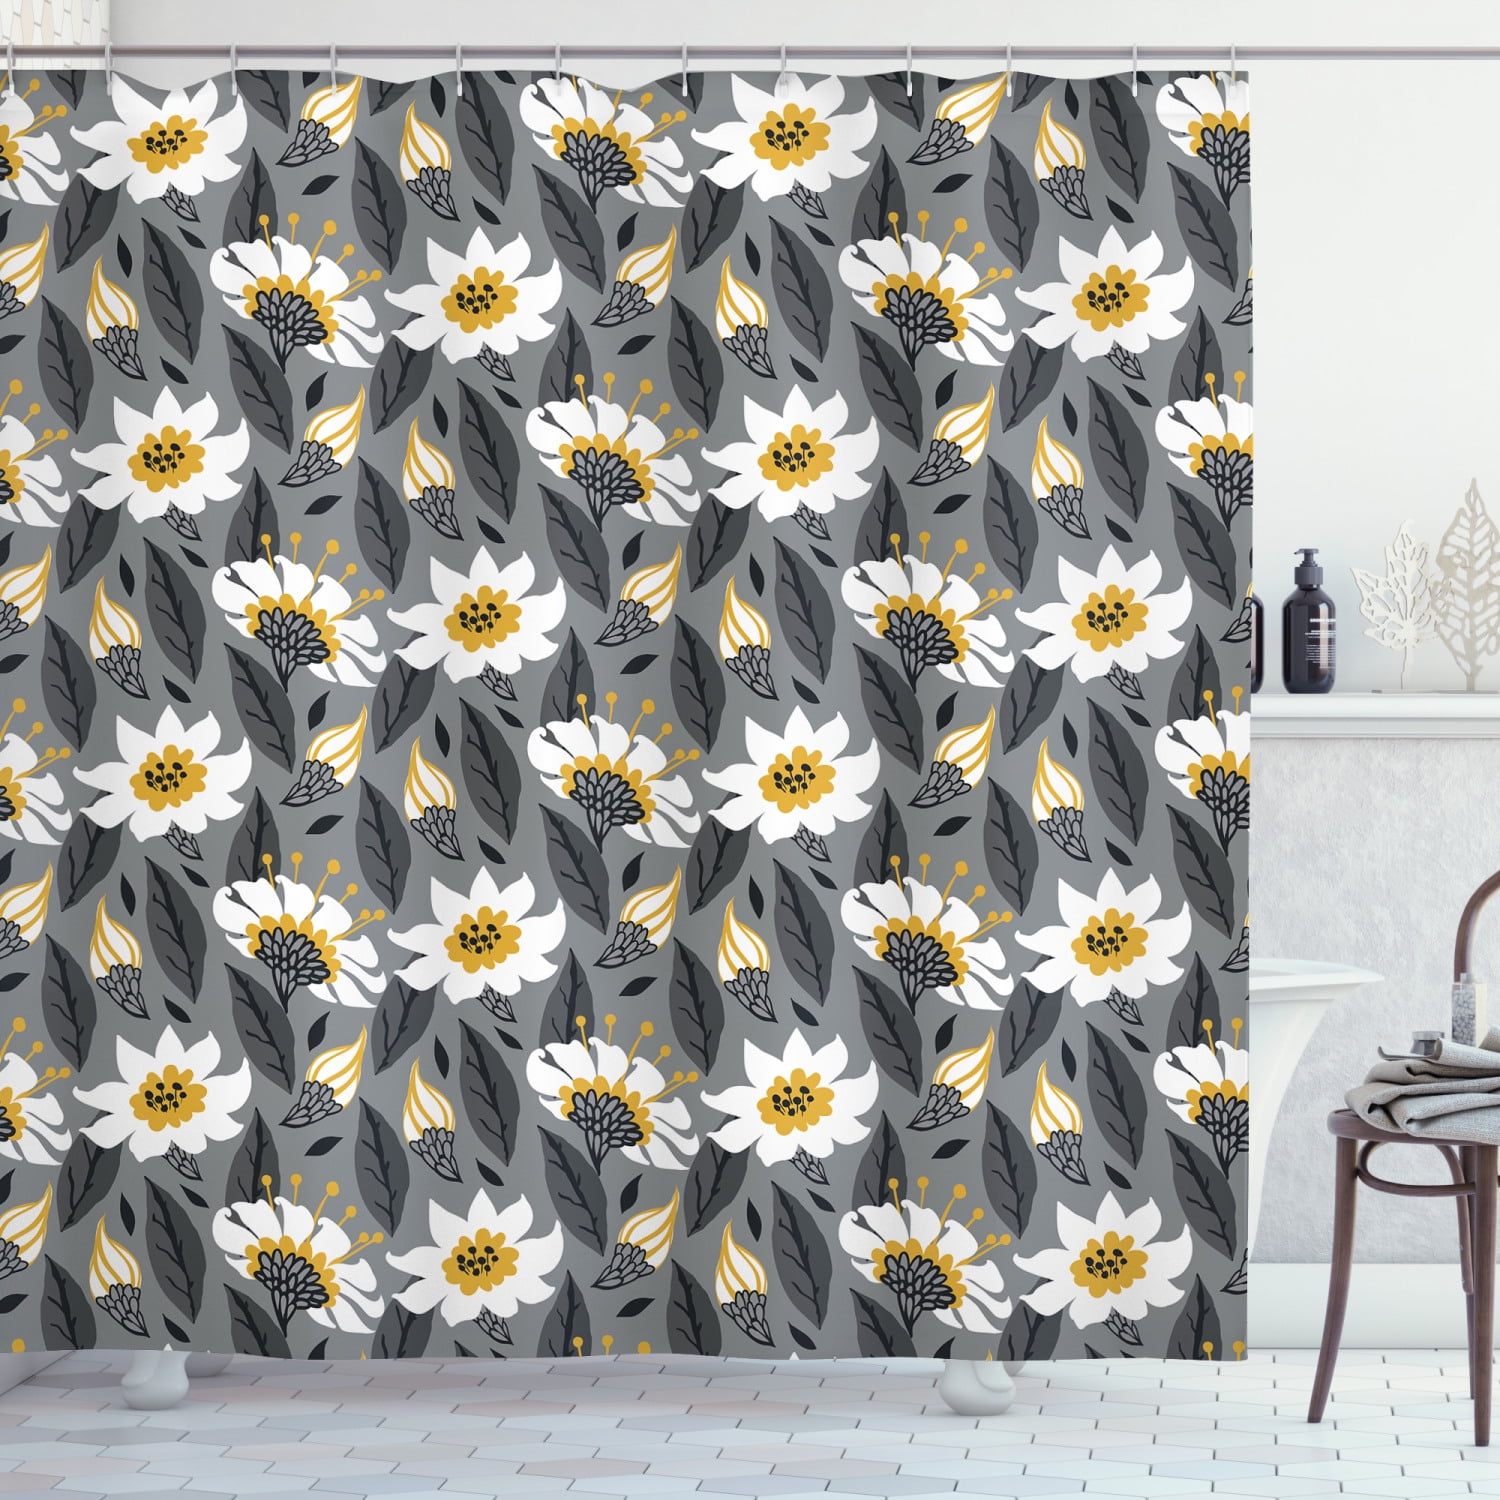 Yellow Wild chrysanthemum Shower Curtain Liner Bathroom Mat Polyester Fabric Set 